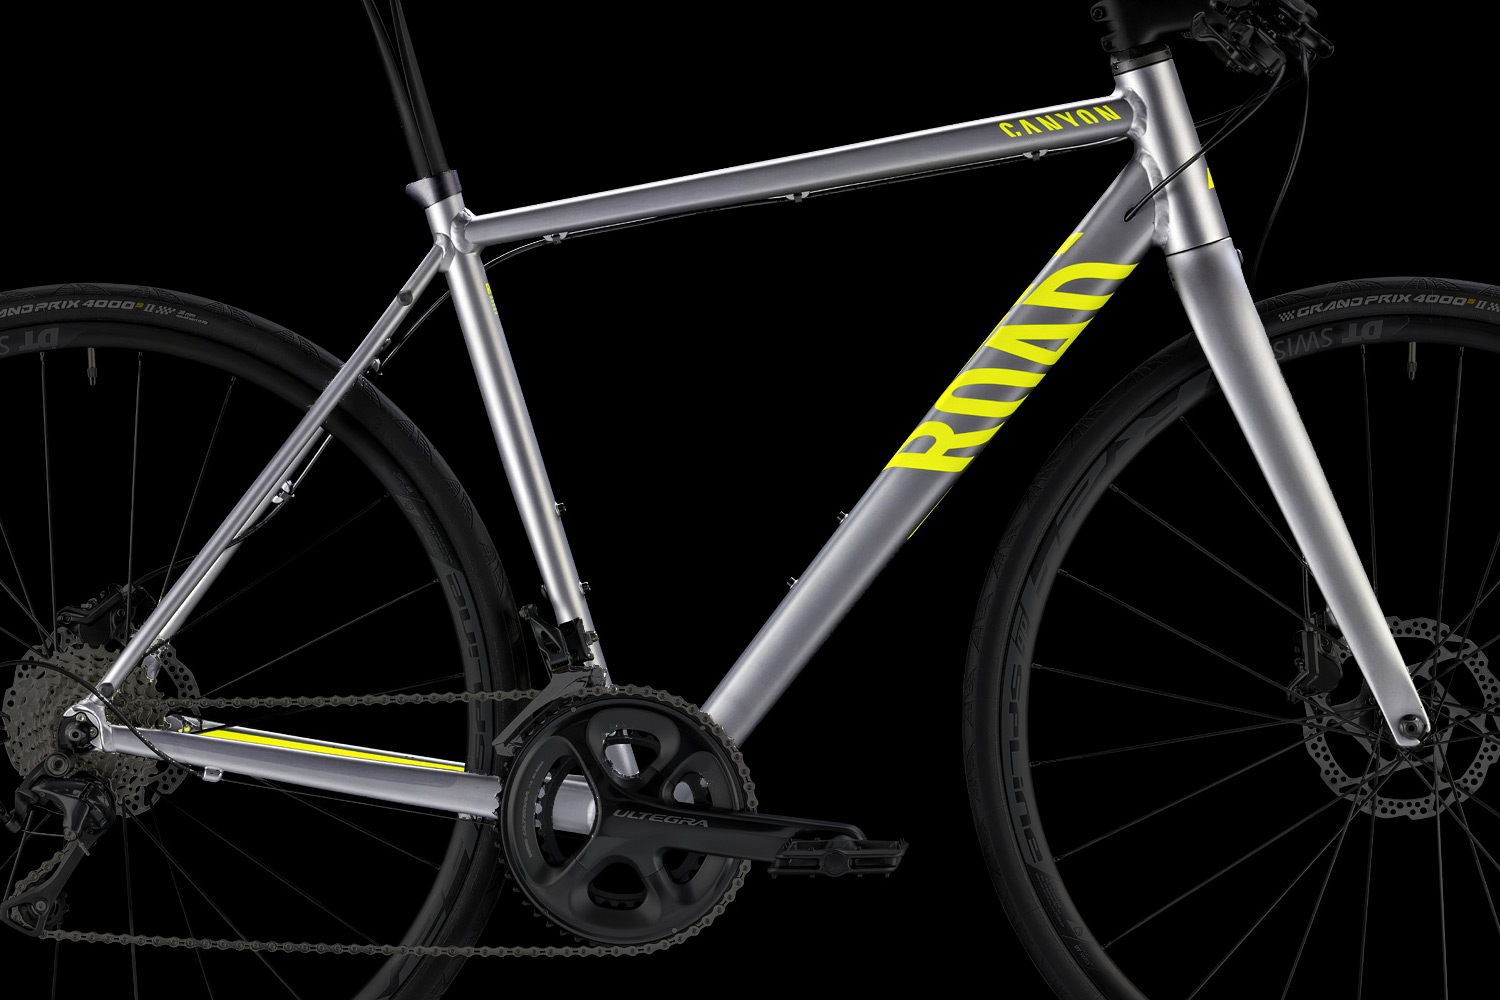 Canyon reworks alloy Roadlite range into a premium flatbar fitness bike